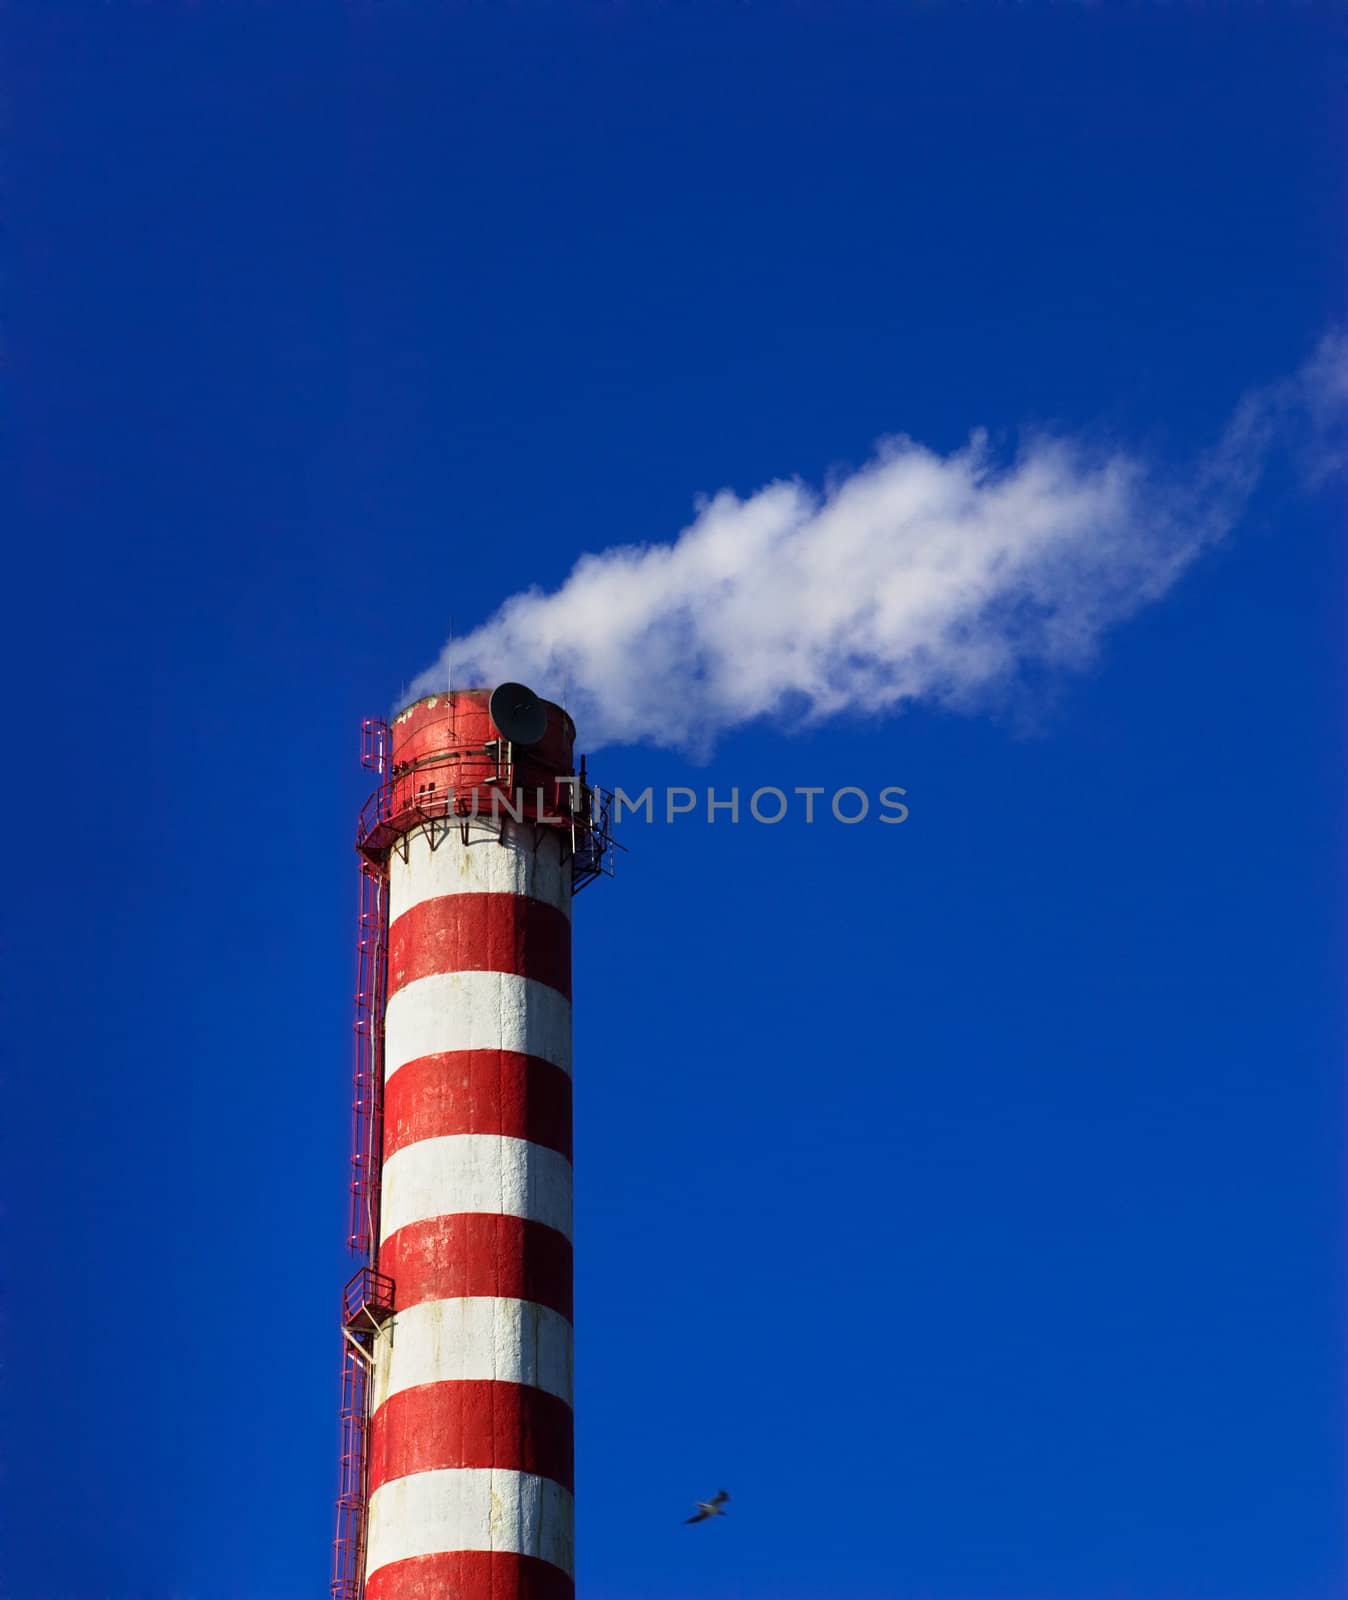 Smoking chimney by ints